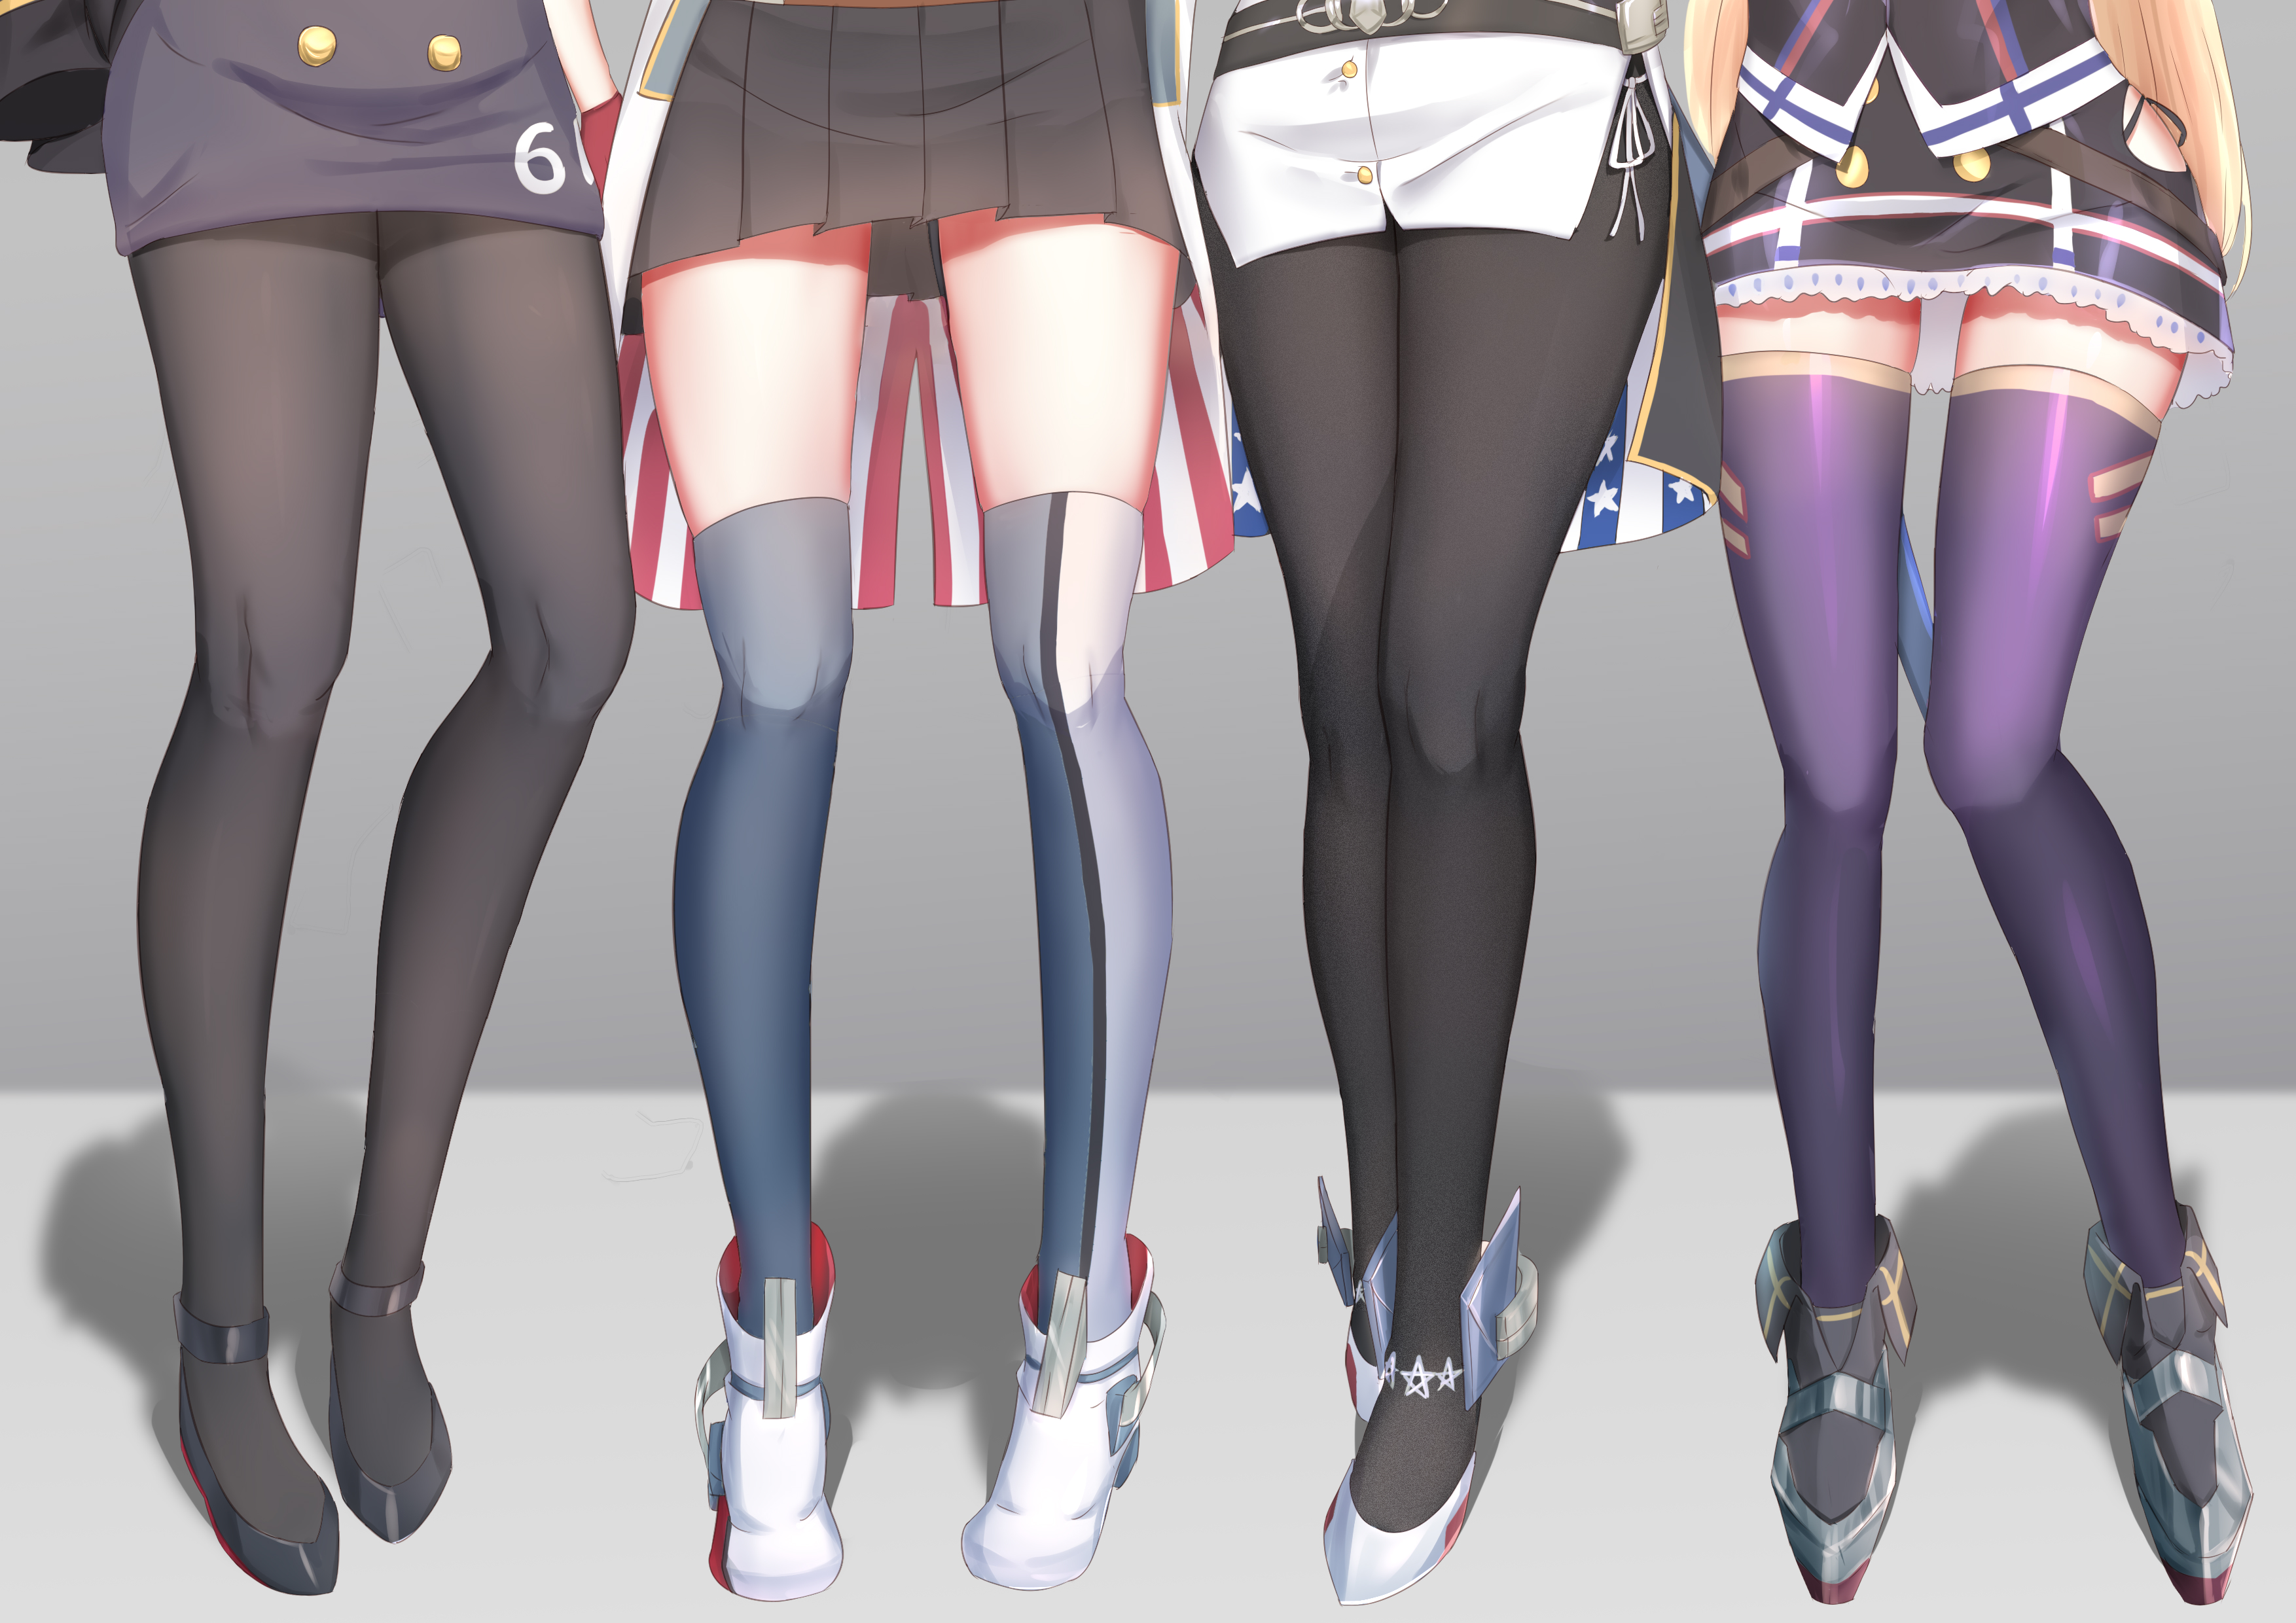 Anime 3508x2480 feet foot fetishism anime girls thighs legs minimalism stockings pantyhose line-up women quartet